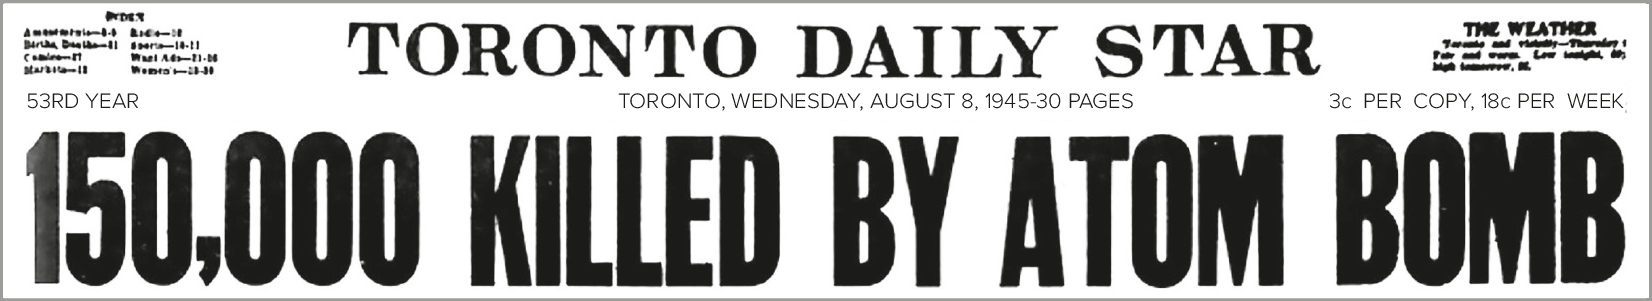 Manchete de jornal. Em preto e branco. Título em inglês: Toronto Daily Star. TORONTO, WEDNESDAY, AUGUST eight, nineteen forty-five, thirty PAGES. Na parte inferior, texto: one hundred fifty thousand KILLED BY ATOM BOMB."